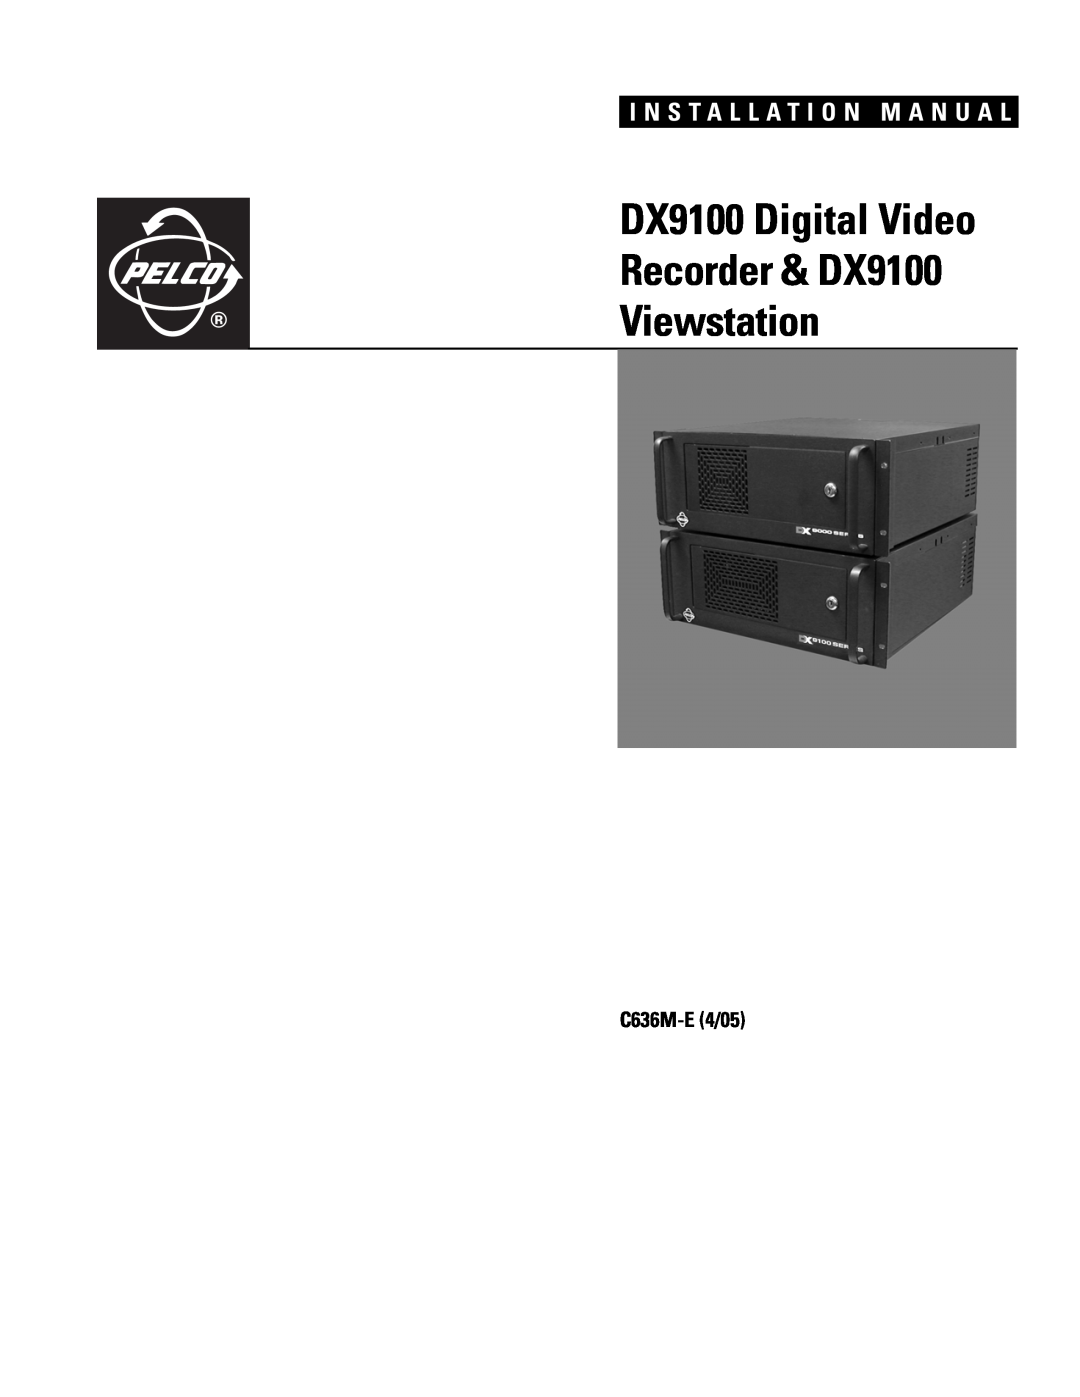 Pelco installation manual I N S T A L L A T I O N M A N U A L, C636M-E 4/05, Recorder & DX9100, Viewstation 